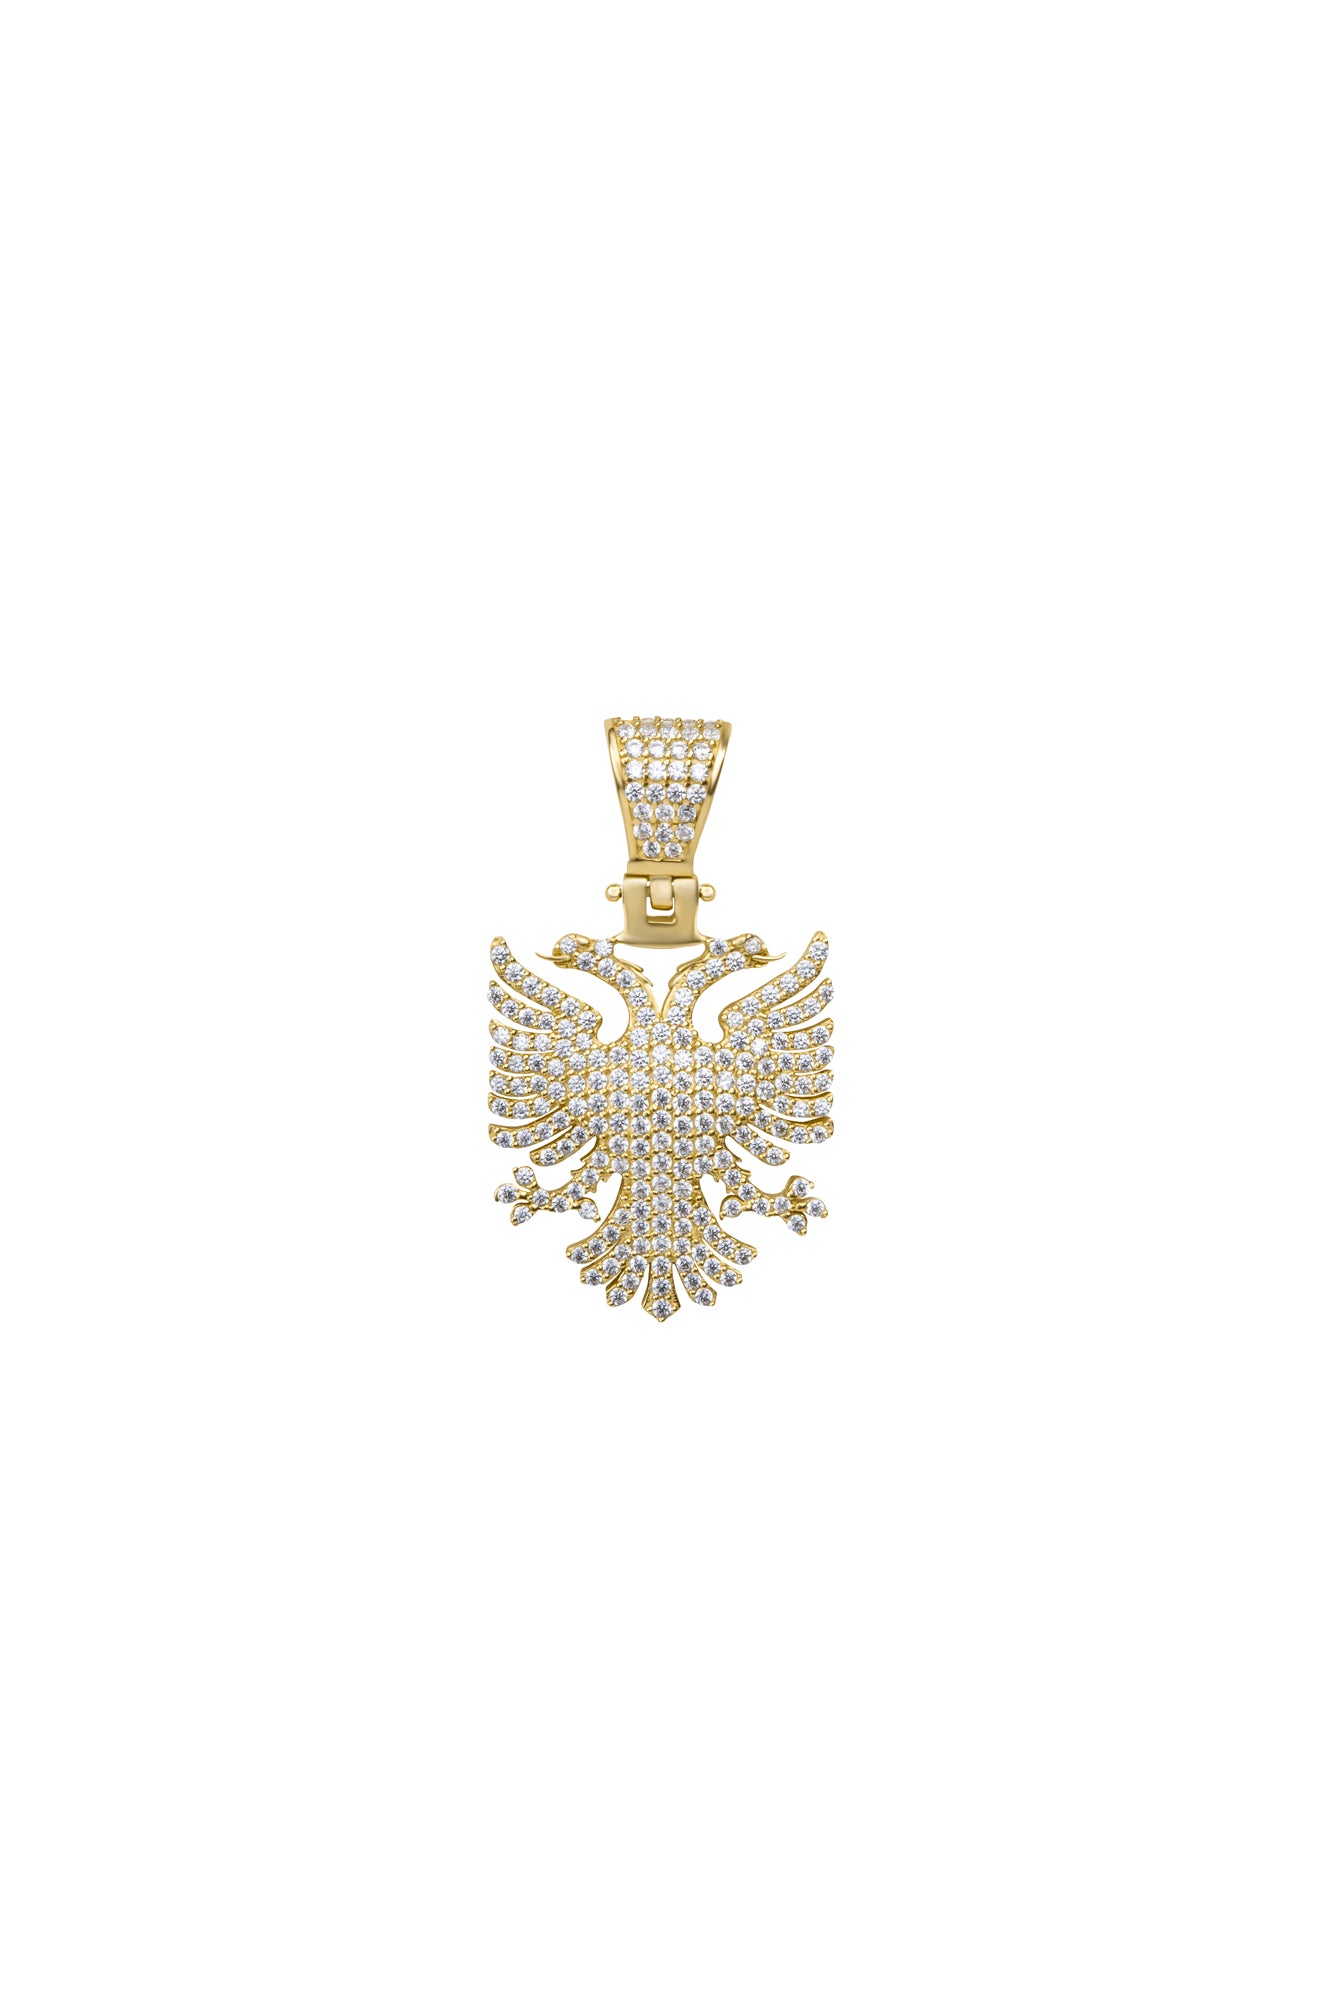 5th Republic Gold | Small - Serma International